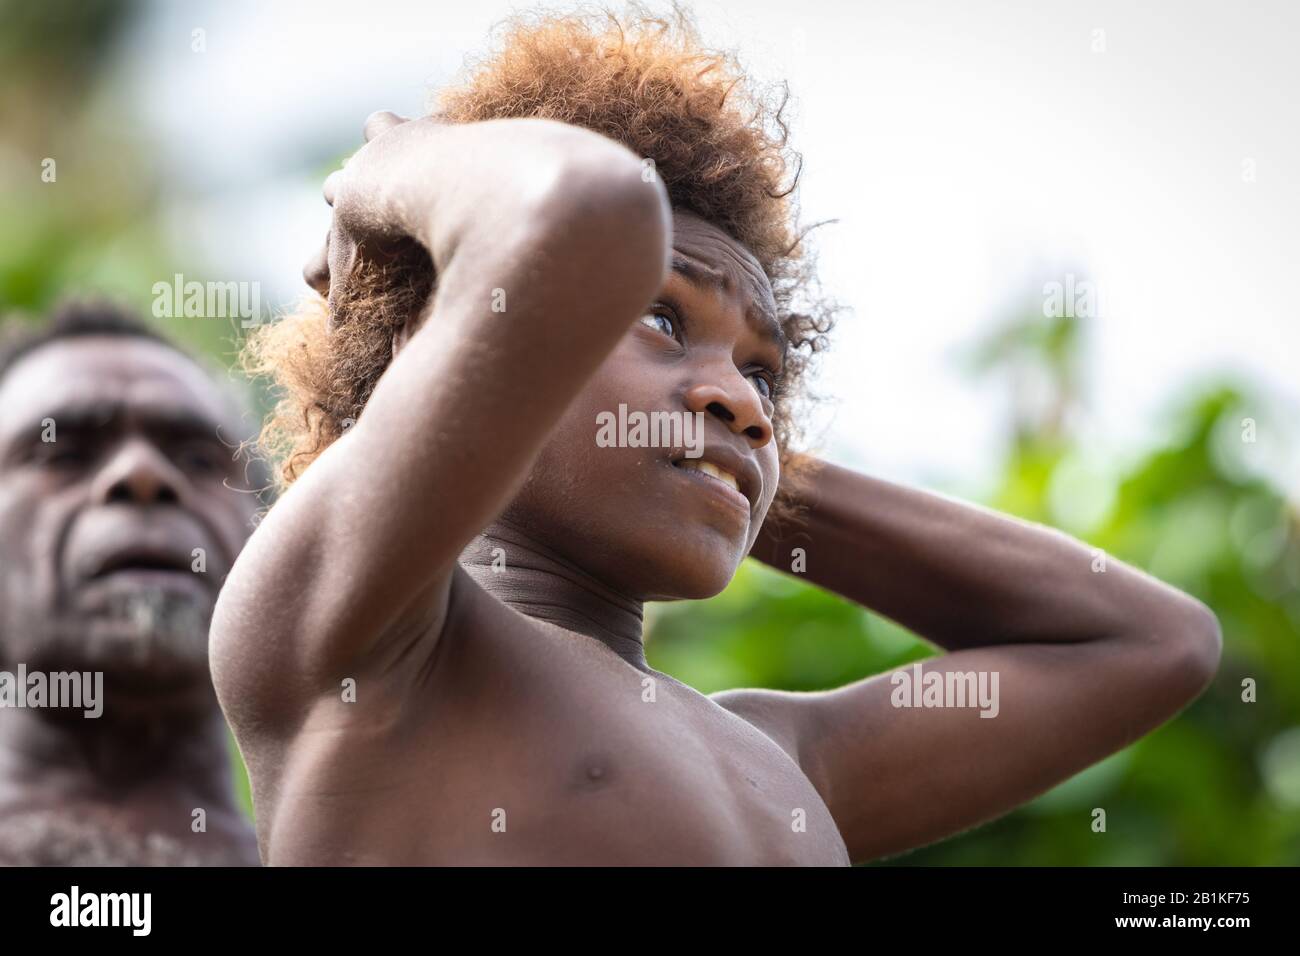 Pentecost island Vanuatu, South Pacific, Oceania : Melanesian boy portrait looking up smiling Stock Photo